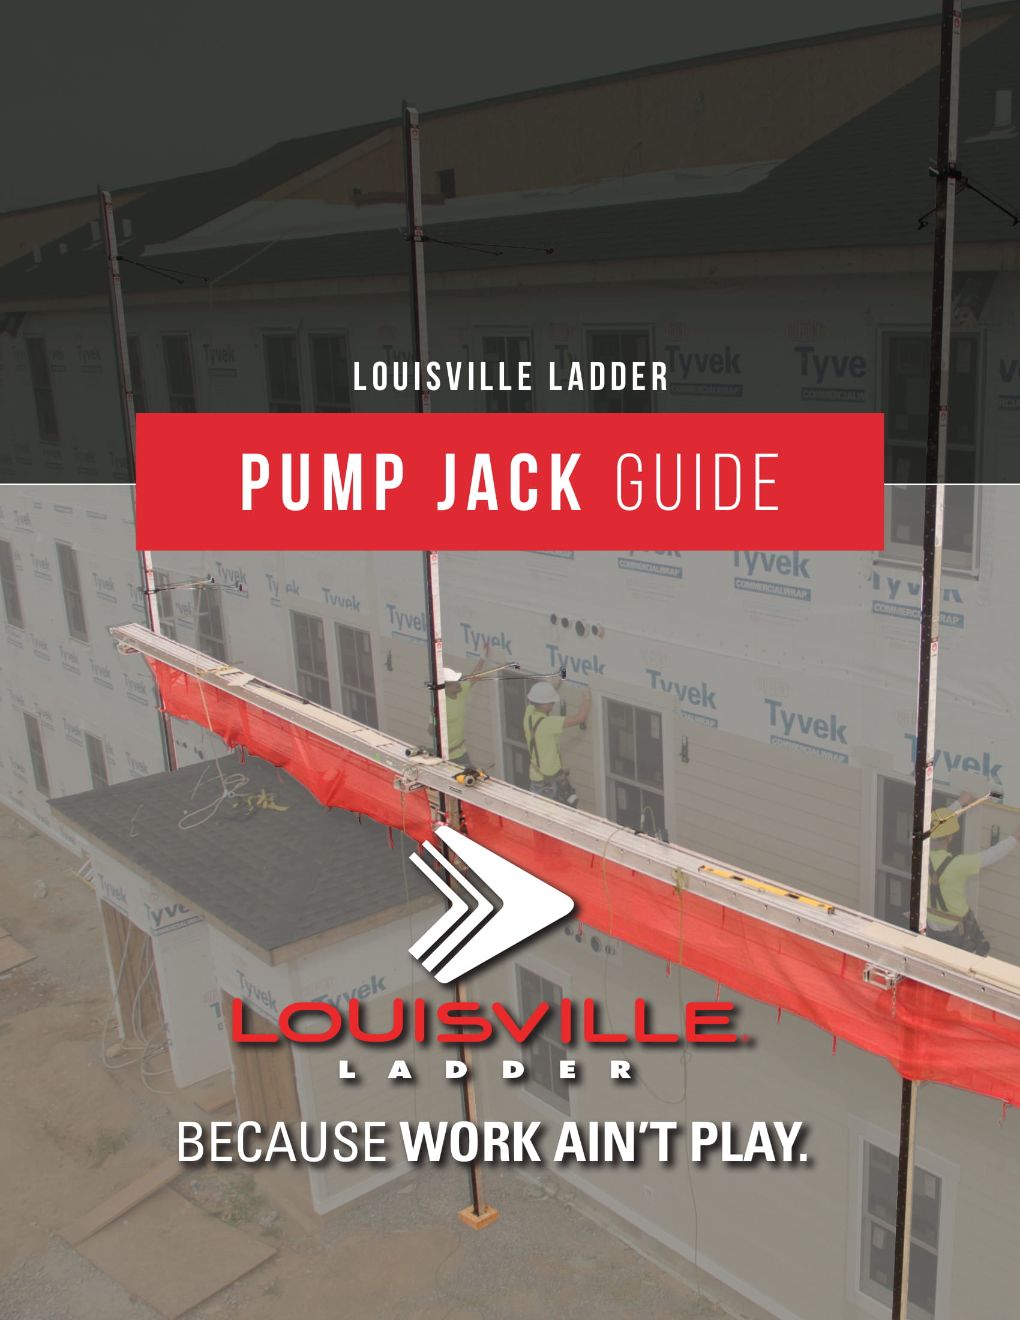 Pump Jack Catalog Marketing Material Image